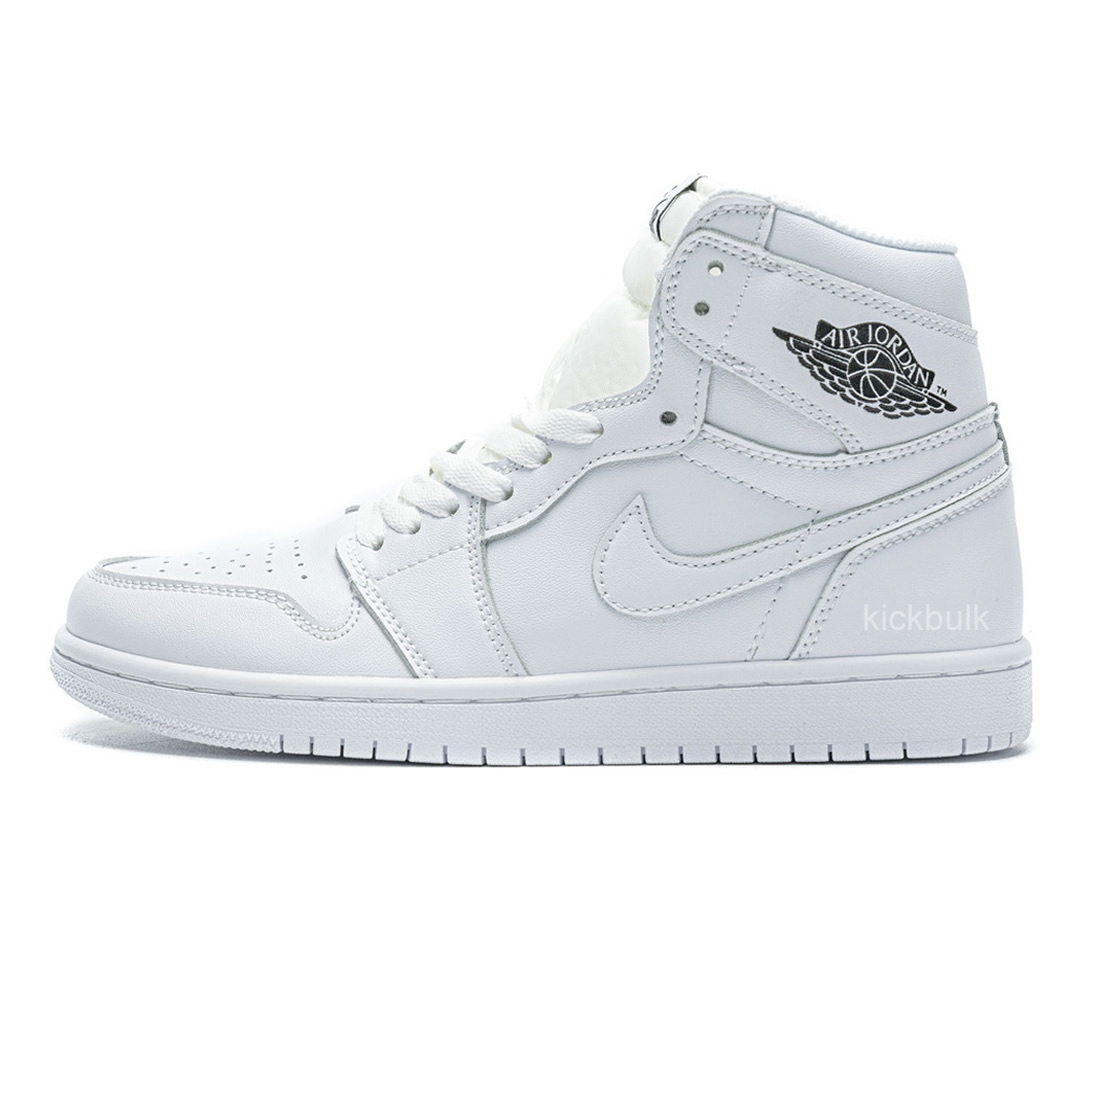 Nike Air Jordan 1 High All White 555088 111 1 - www.kickbulk.co